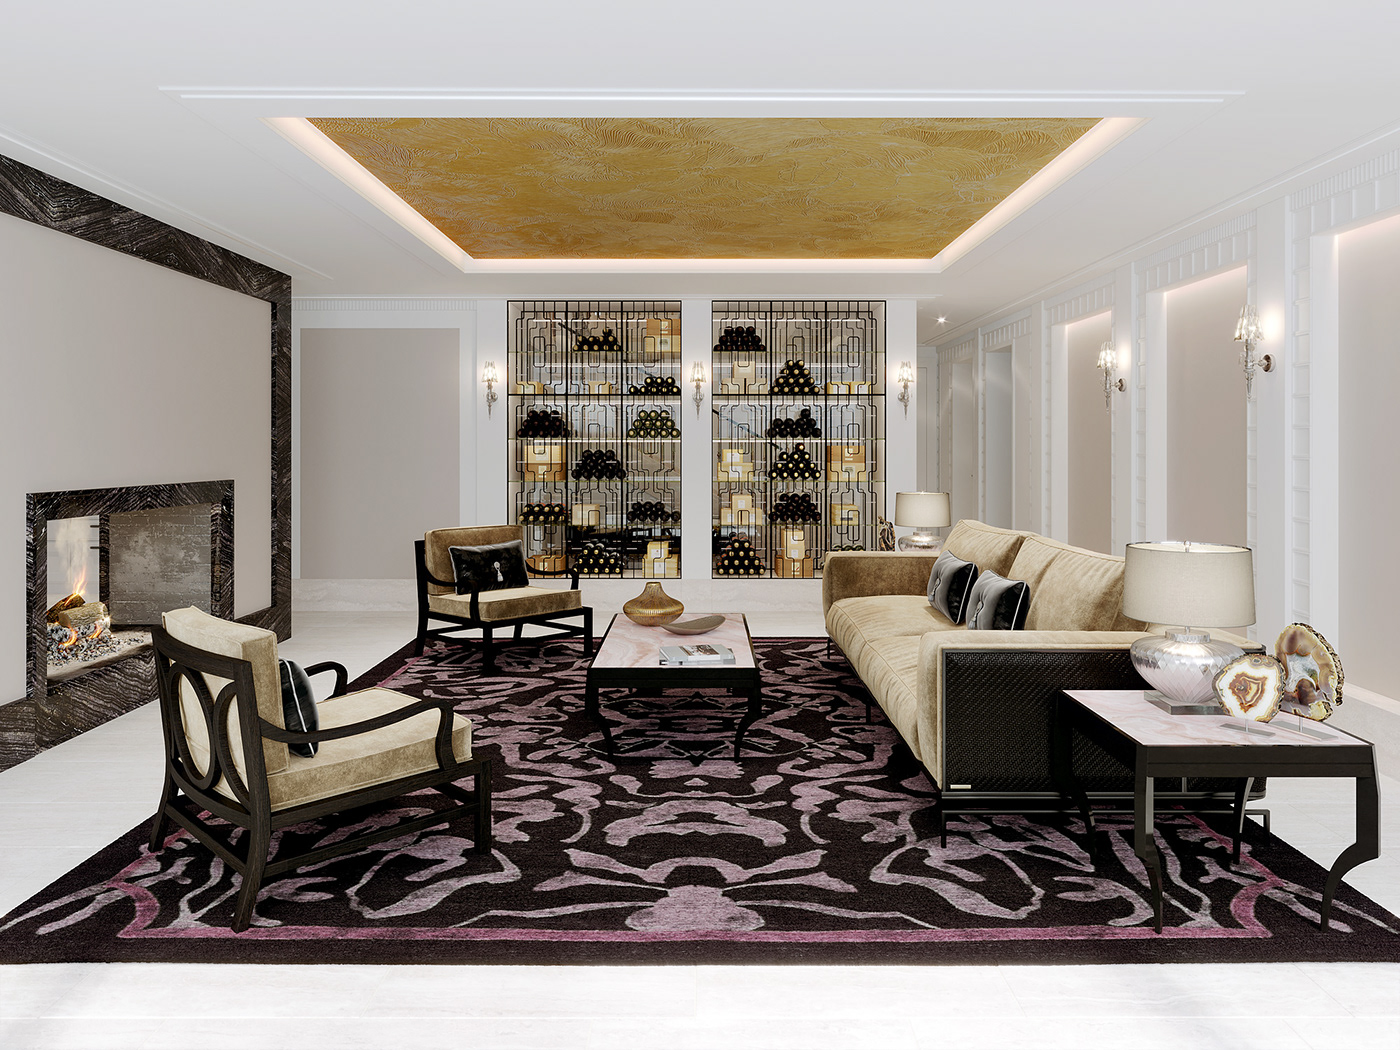 3D alps archviz concept design Interior luxury mountains rustic swiss